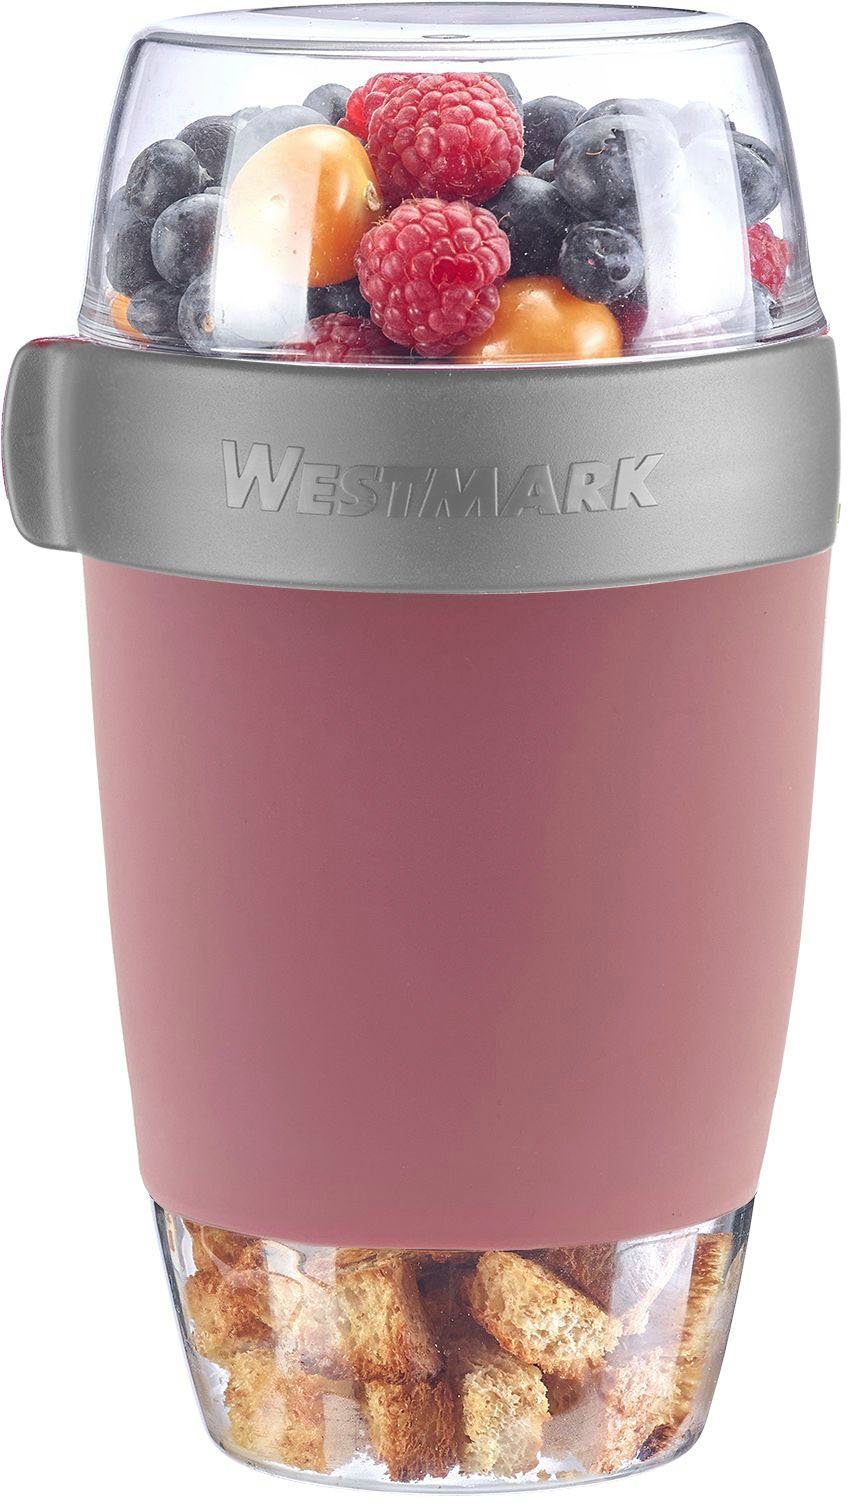 WESTMARK Mehrwegbecher, Kunststoff, (1-tlg), ml, Made in Lunchpot, Germany rosa 1150